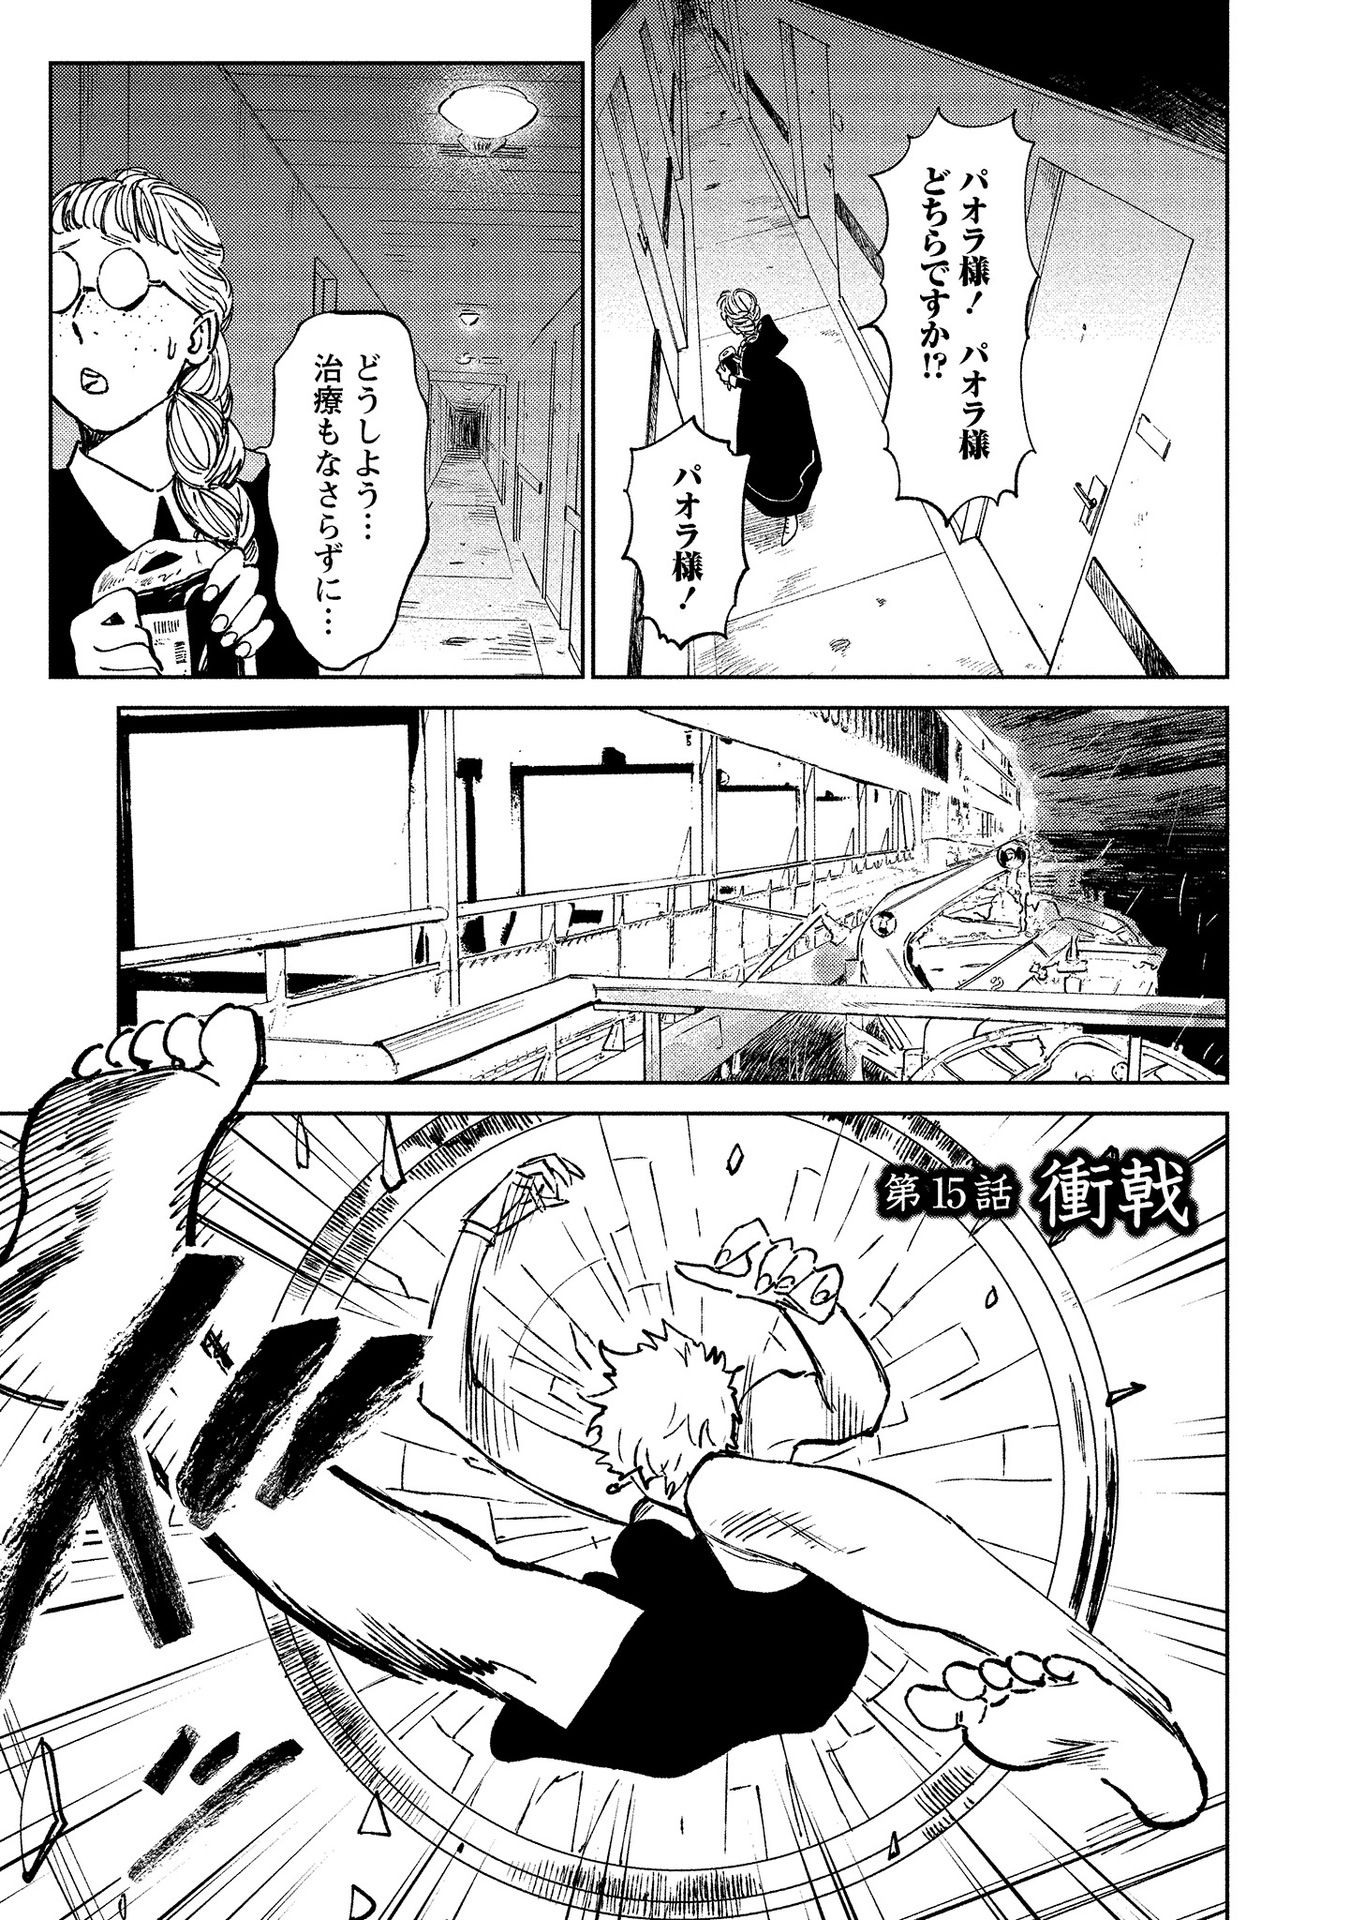 Chikai no Noah - Chapter 15 - Page 1